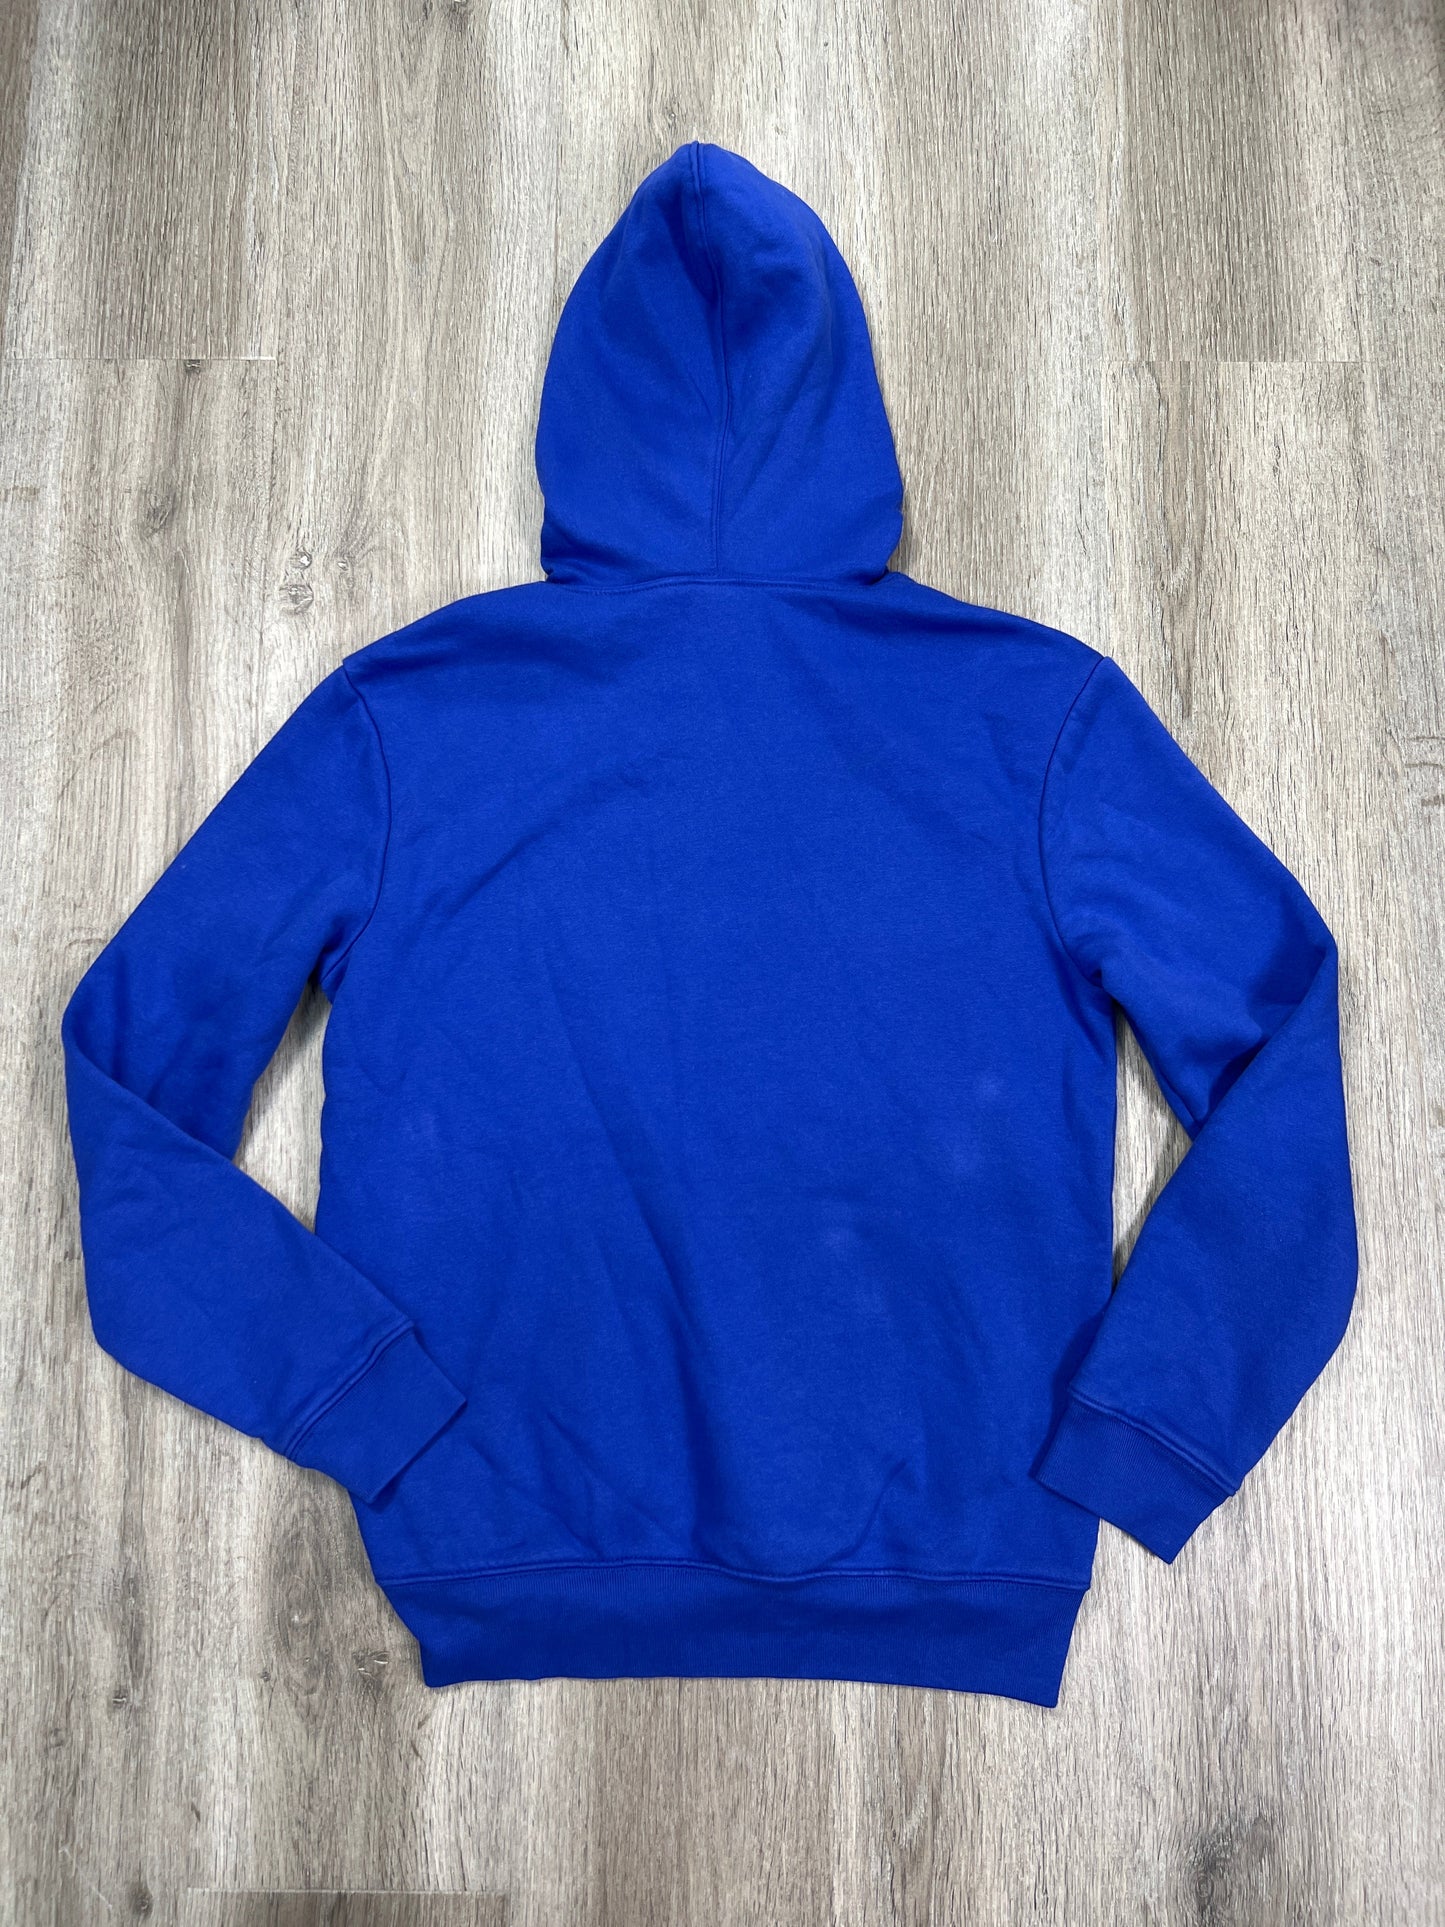 Sweatshirt Hoodie By Gap  Size: Xs